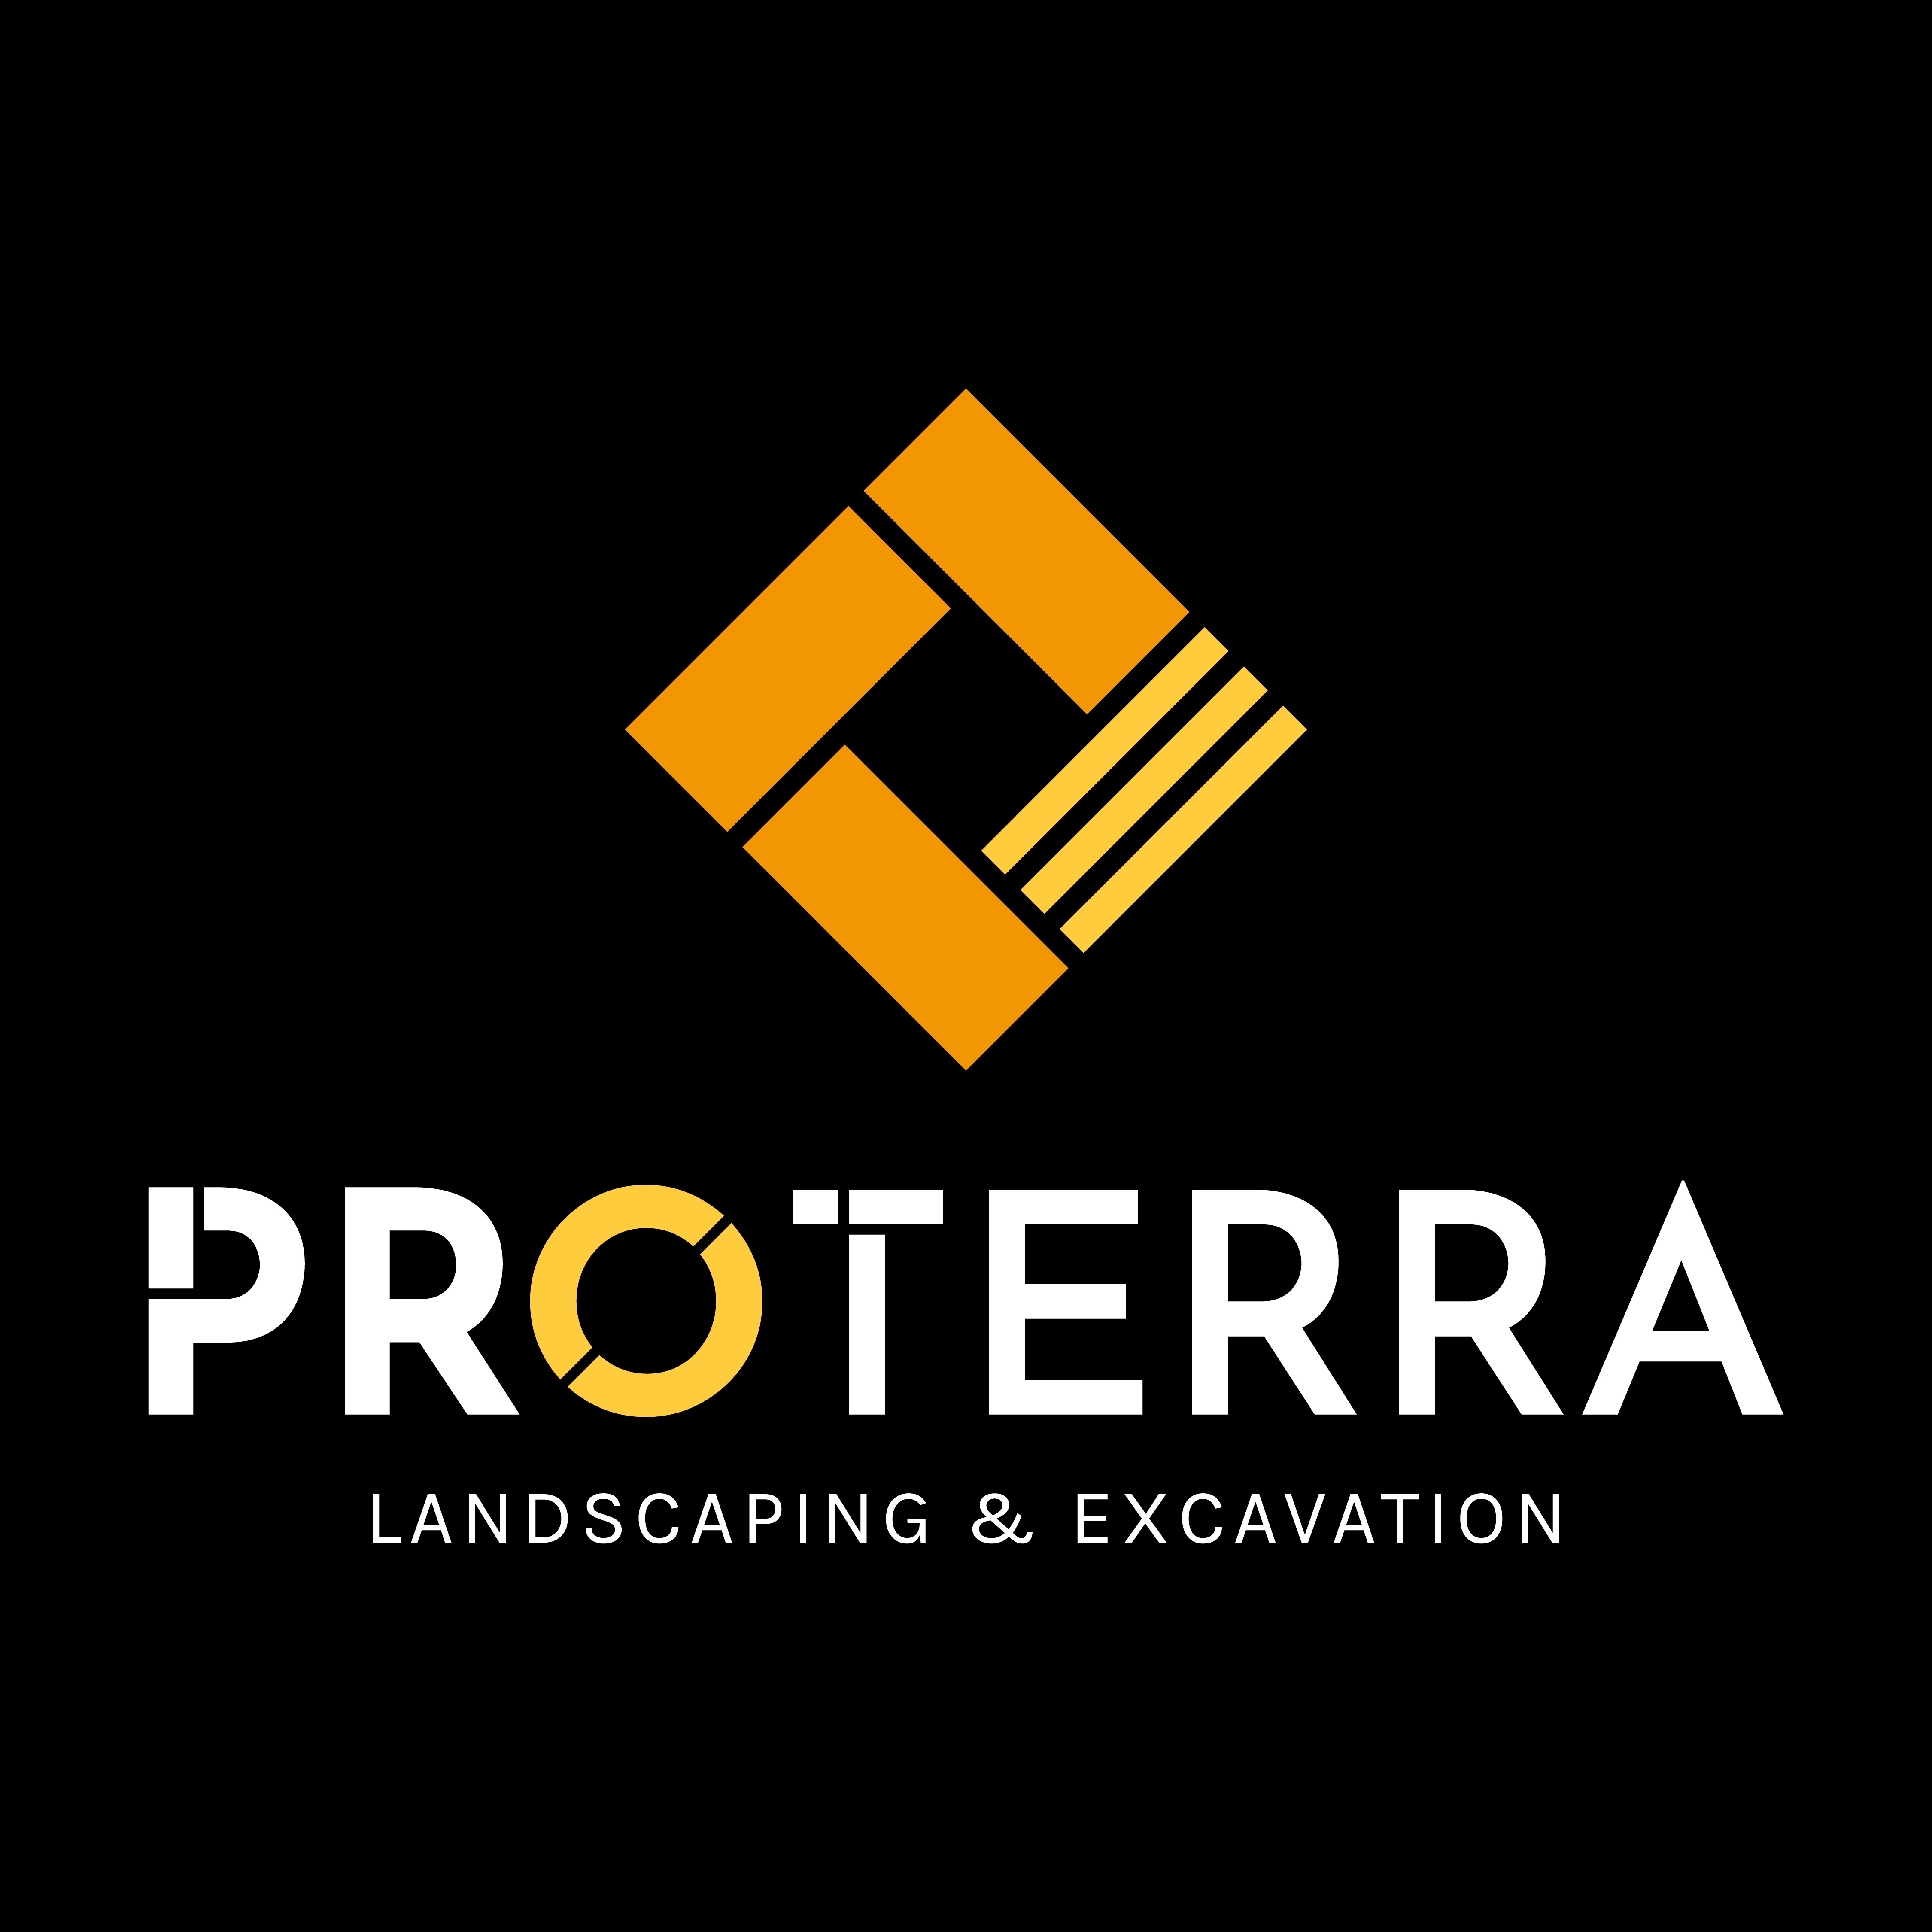 Pro Terra's logo